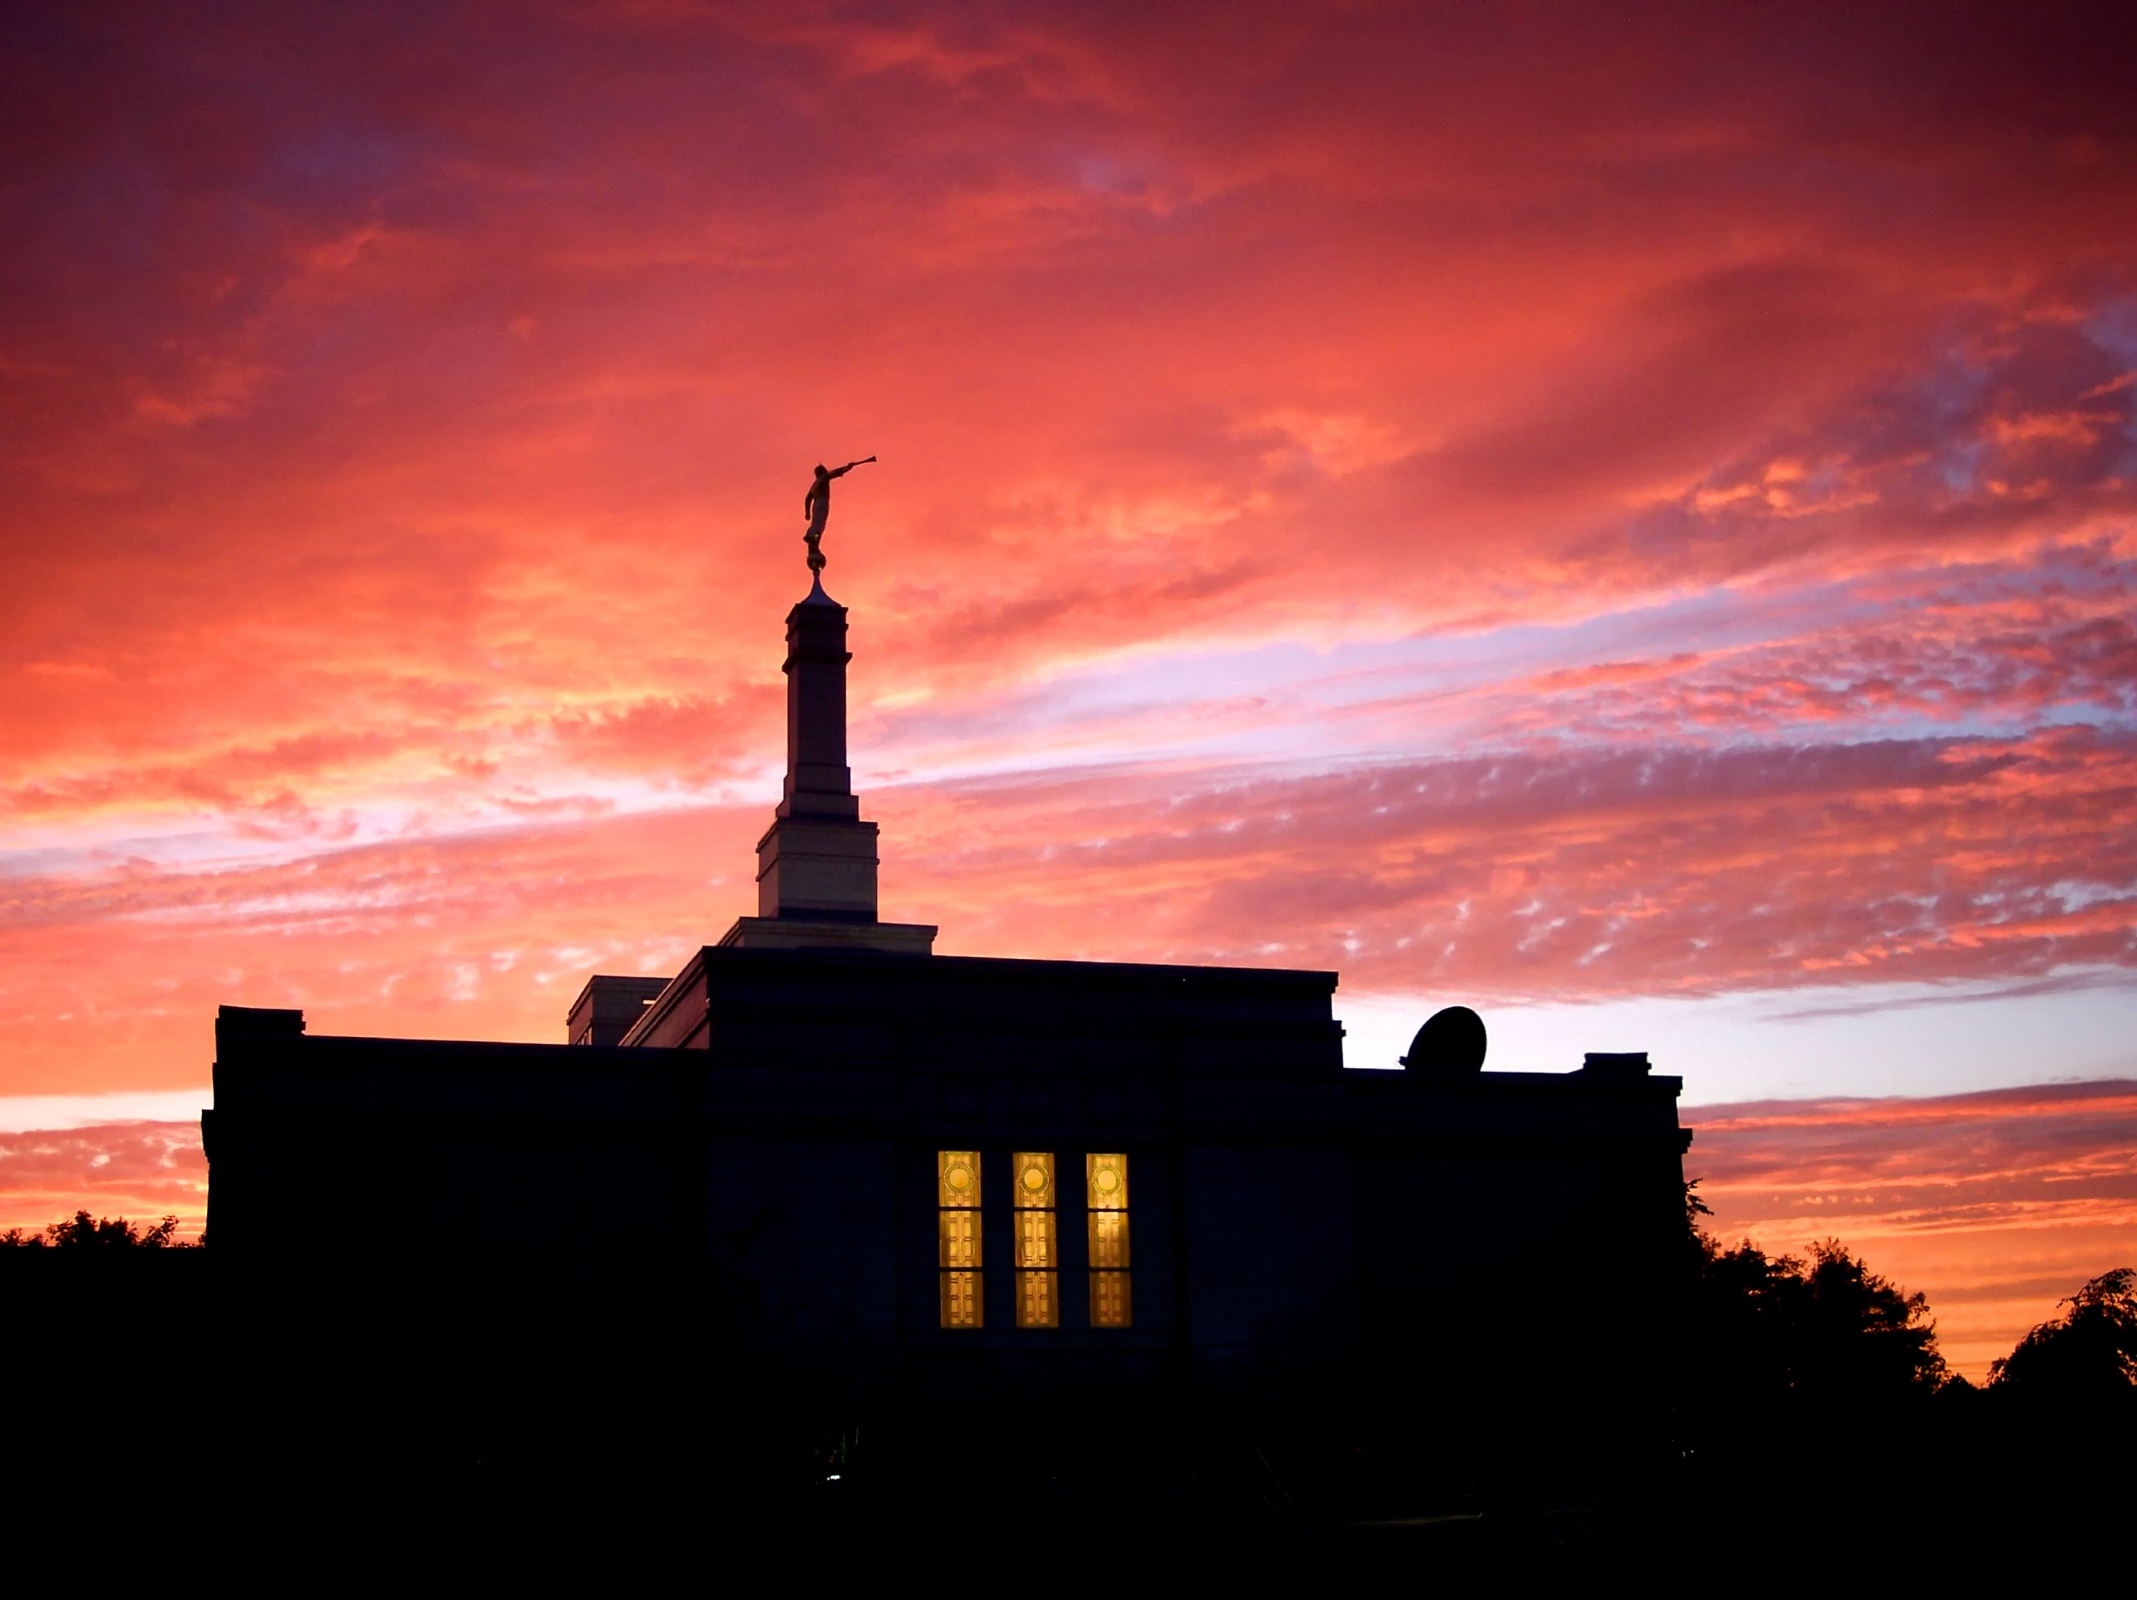 The Halifax Nova Scotia Temple at Sunset